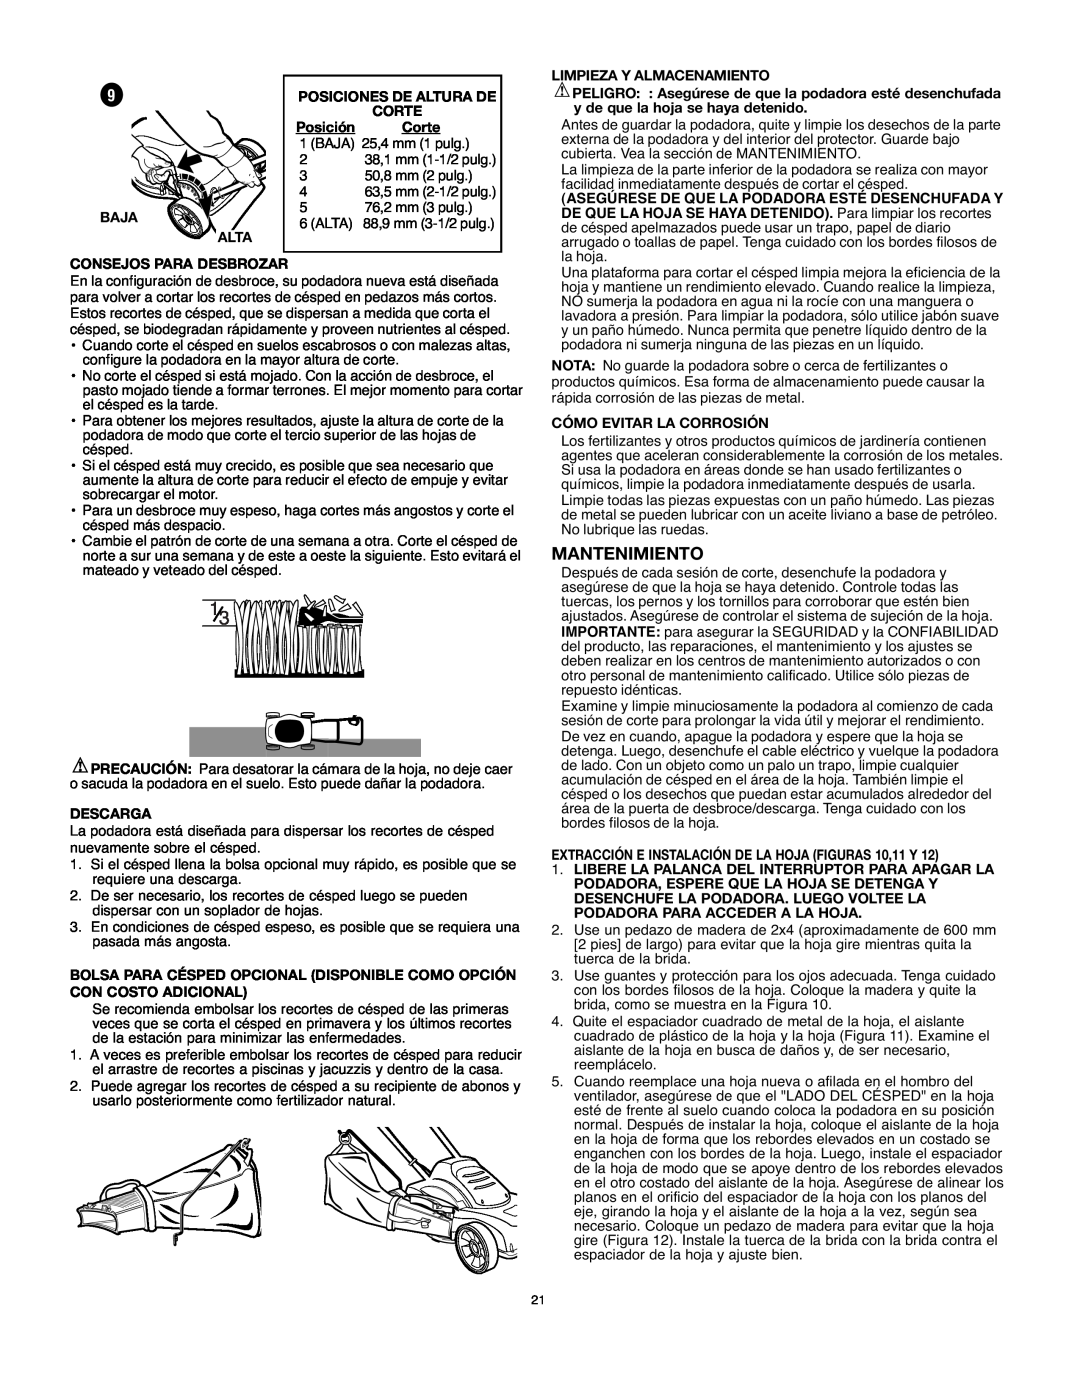 Black & Decker MM575 instruction manual Mantenimiento 